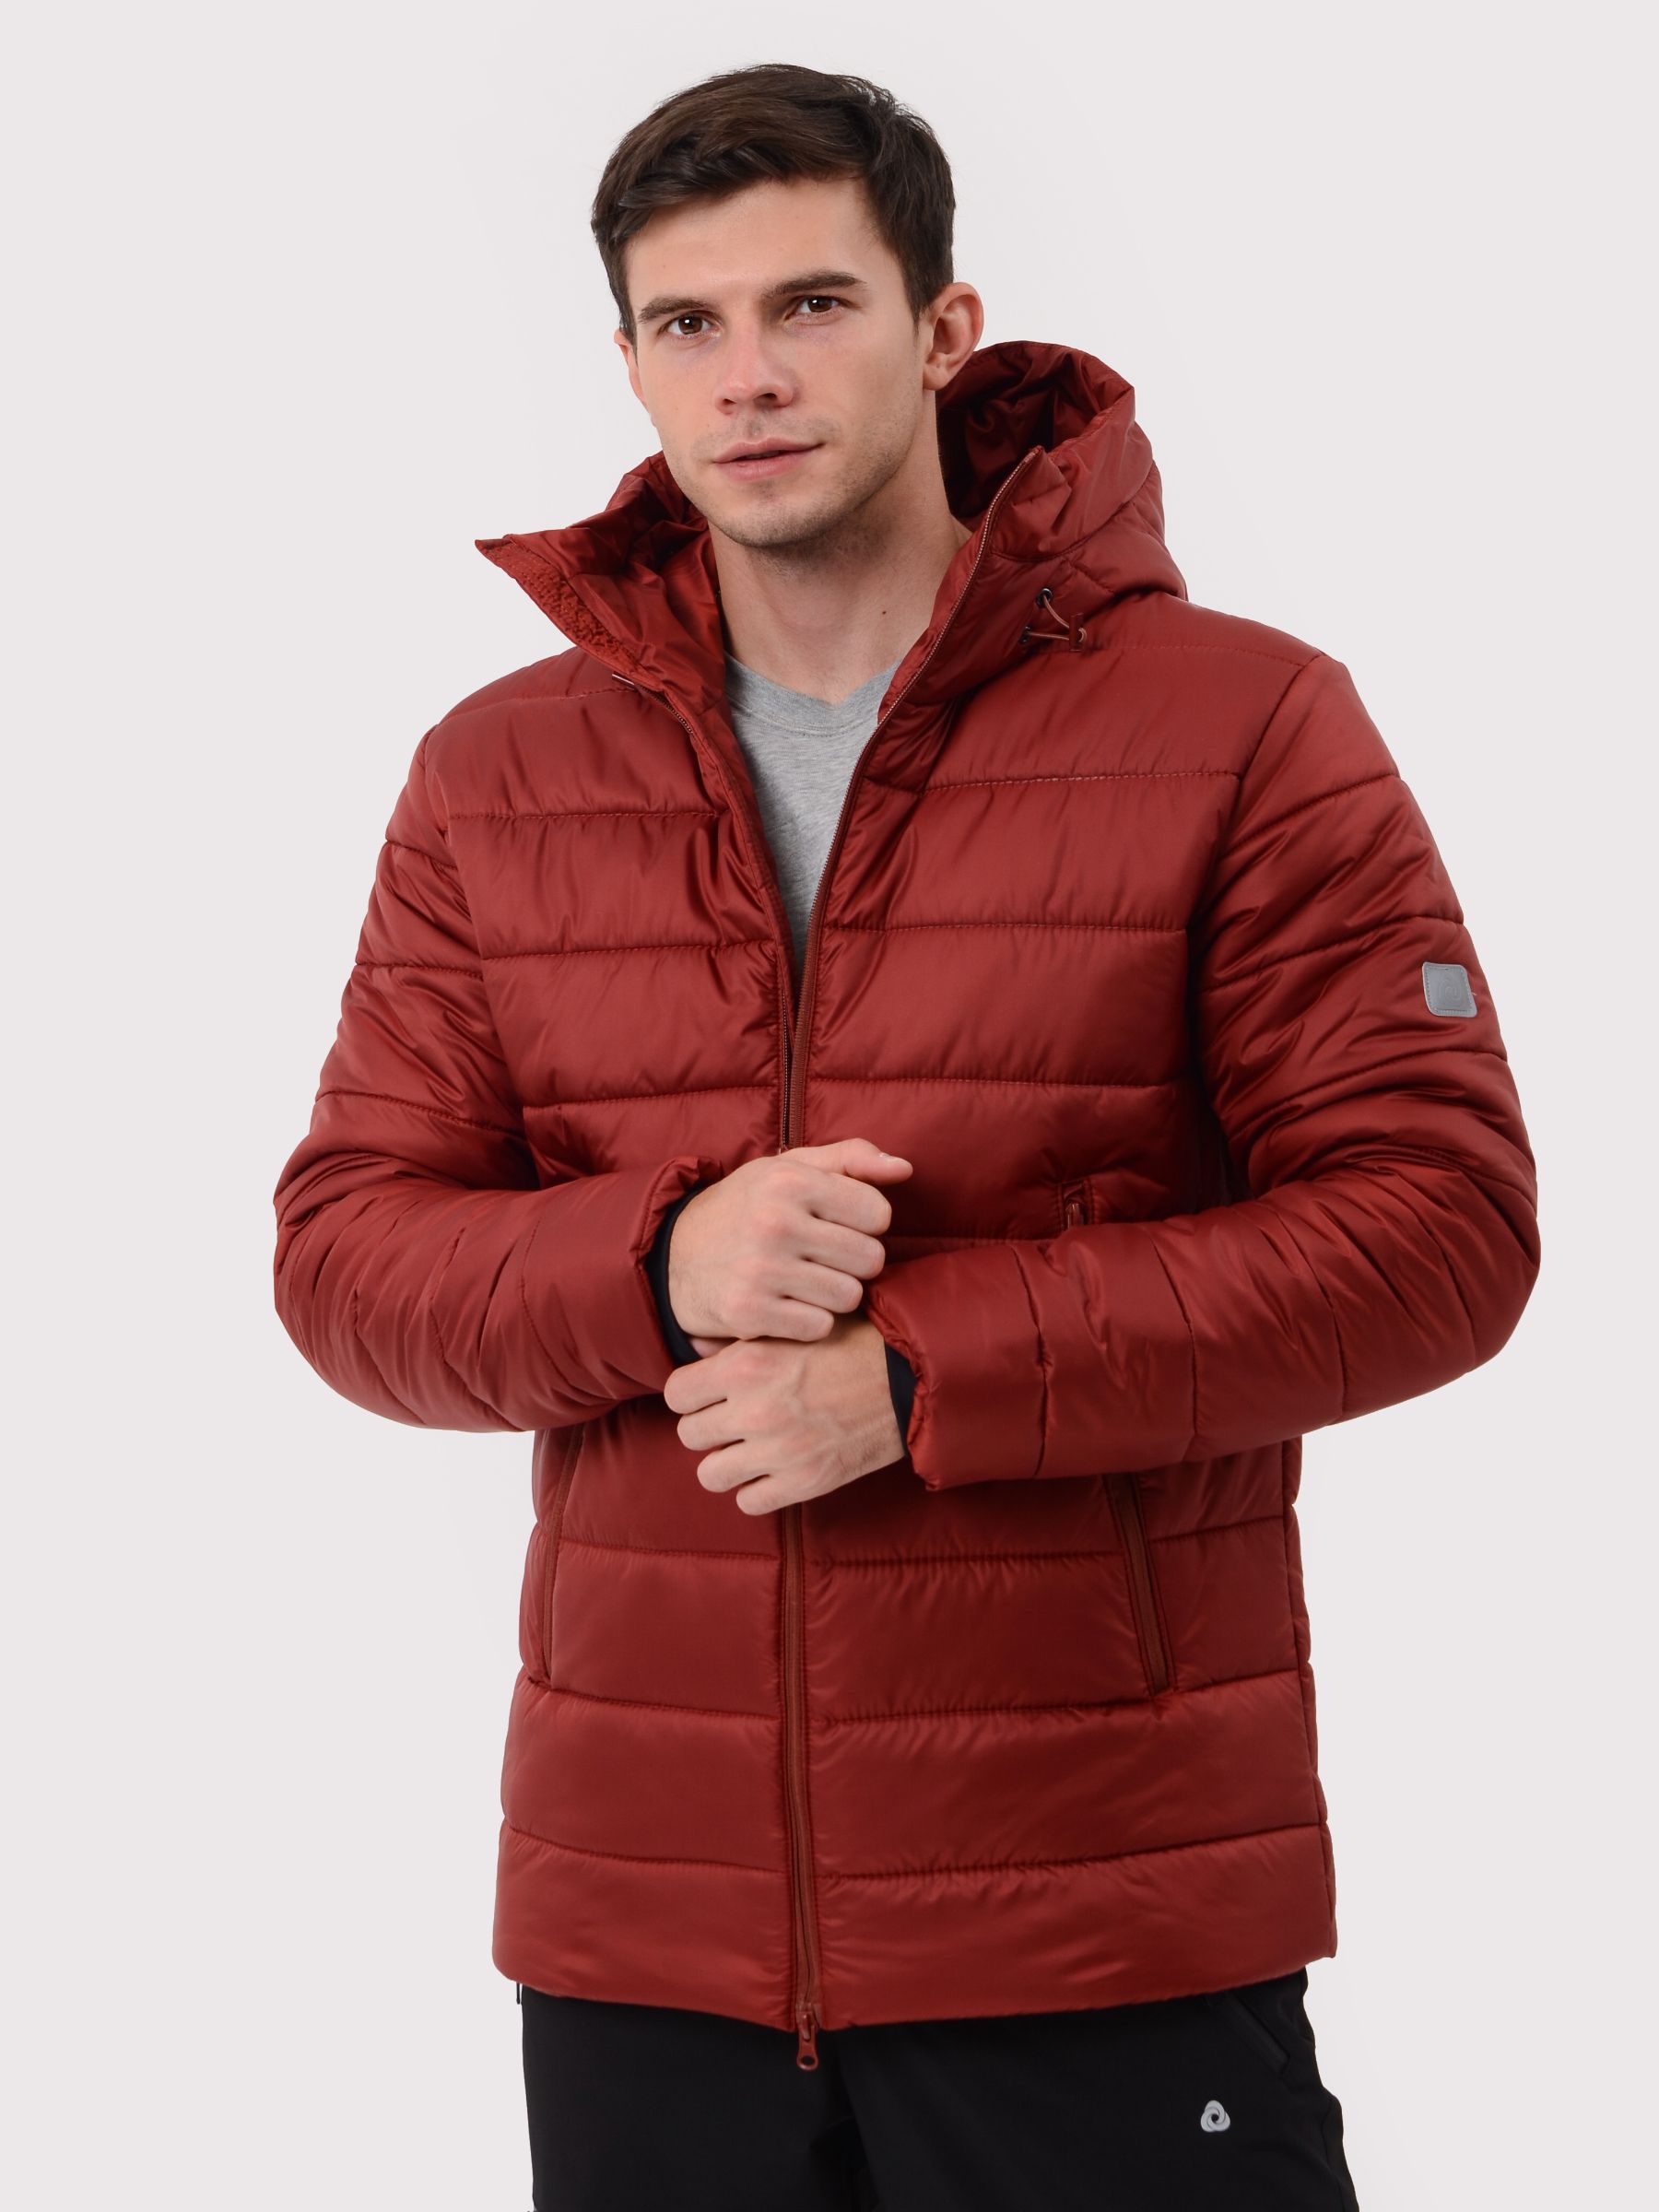 Зимняя мужская куртка Окланд, бургундия